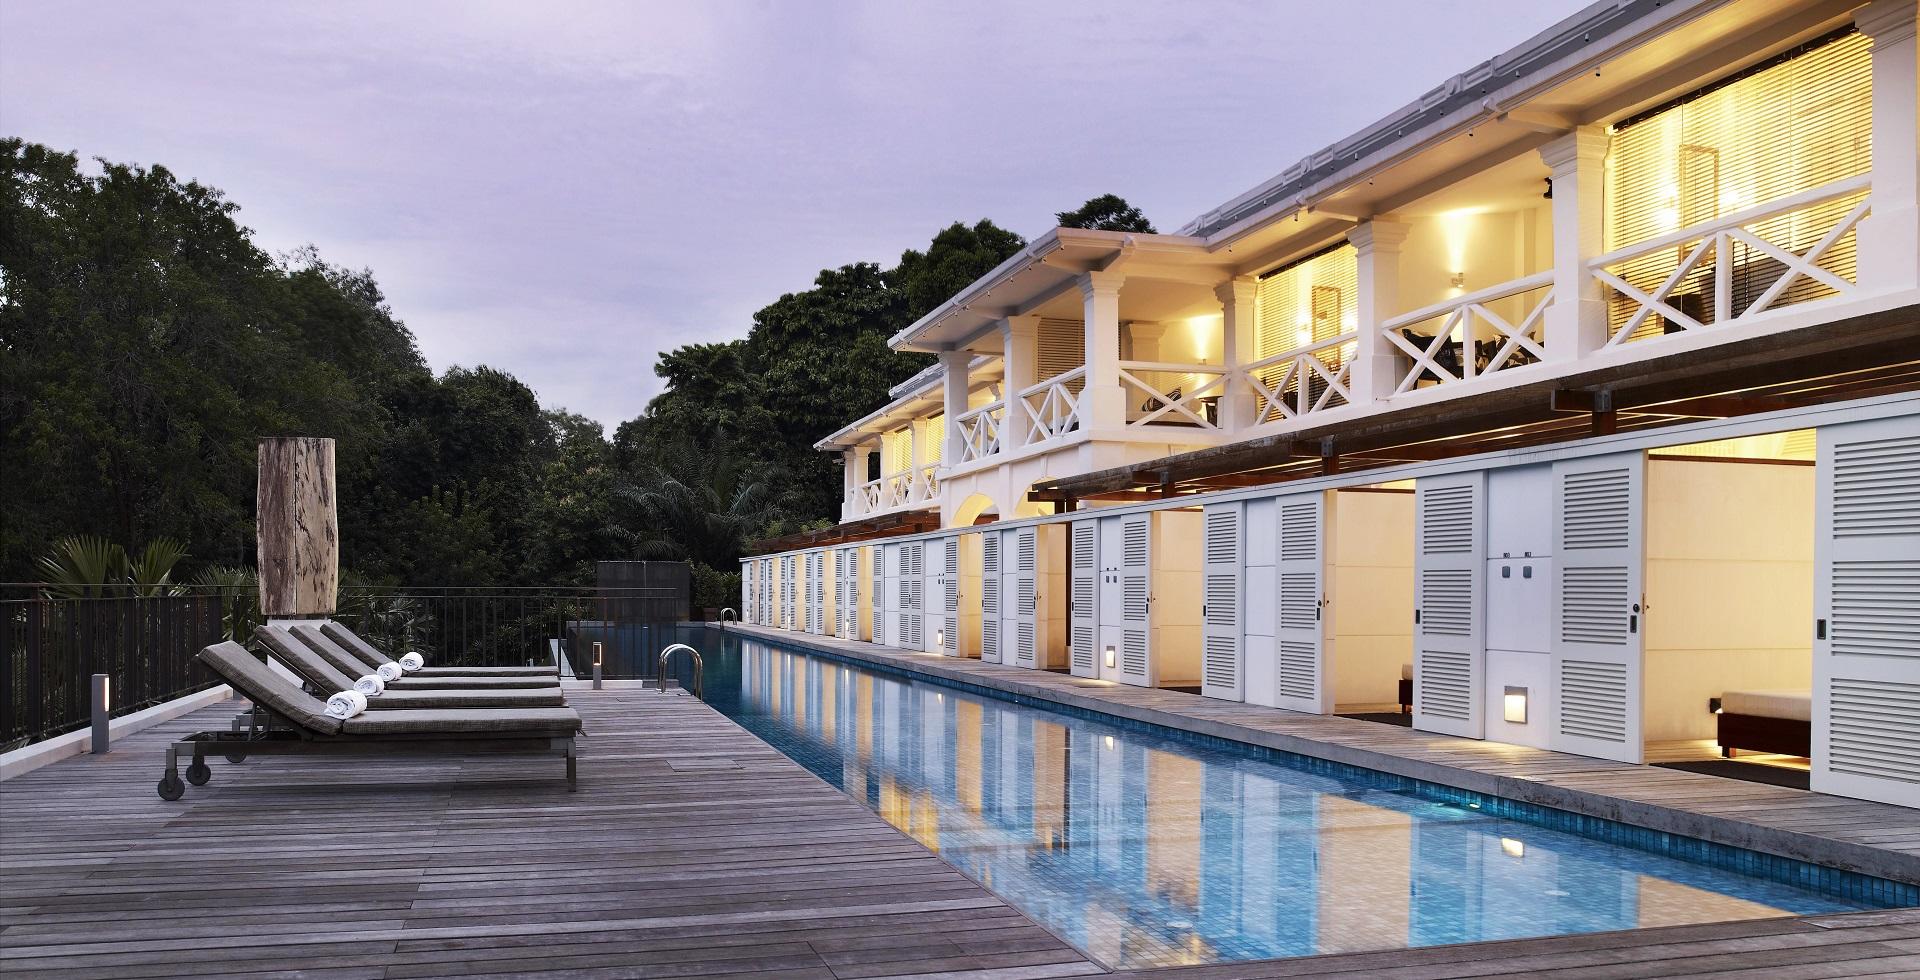 Amara Sanctuary Resort Sentosa 5 Star Heritage Hotel Singapore